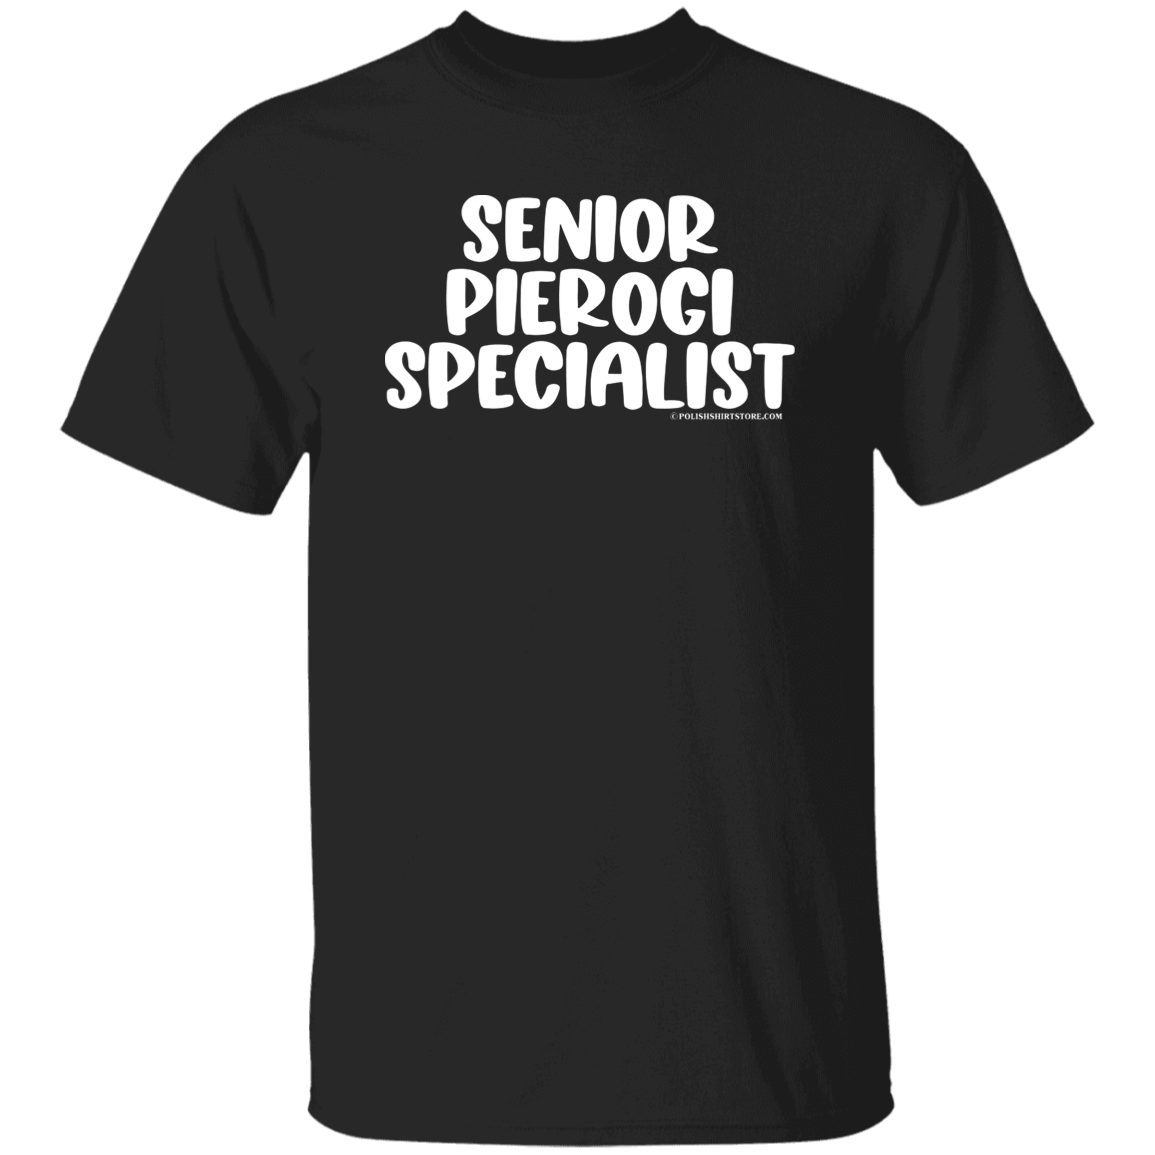 Senior Pierogi Specialist Apparel CustomCat G500 5.3 oz. T-Shirt Black S